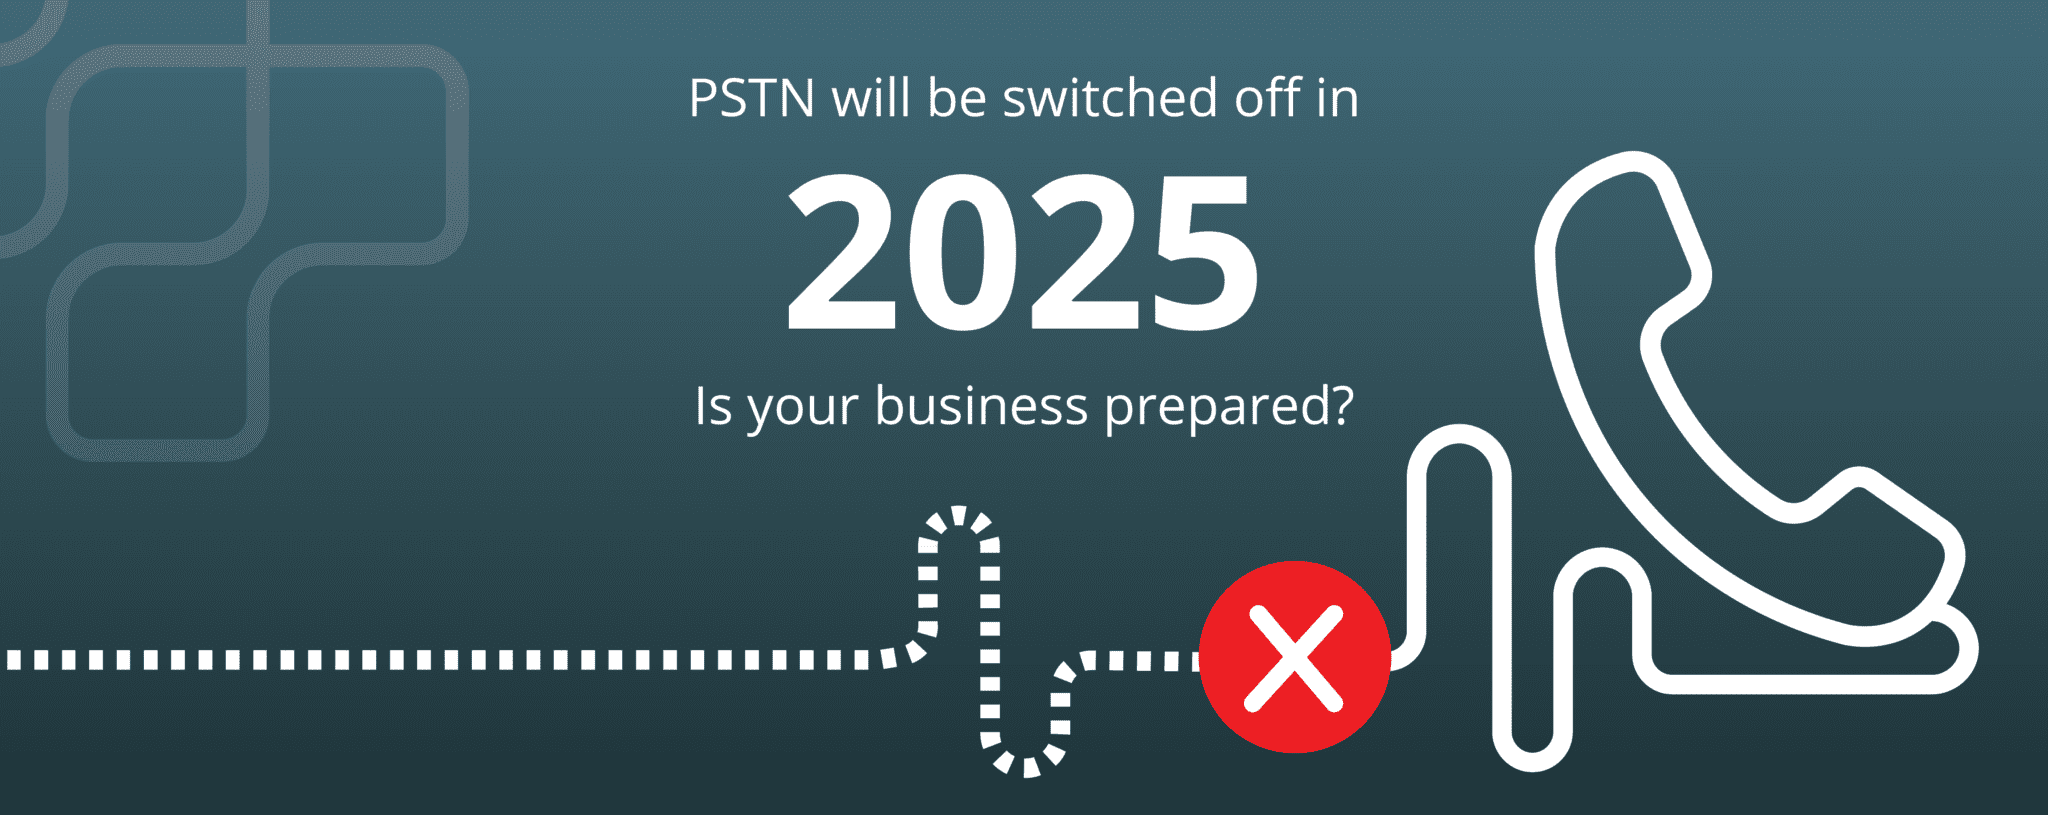 PSTN Switch off Blog Image